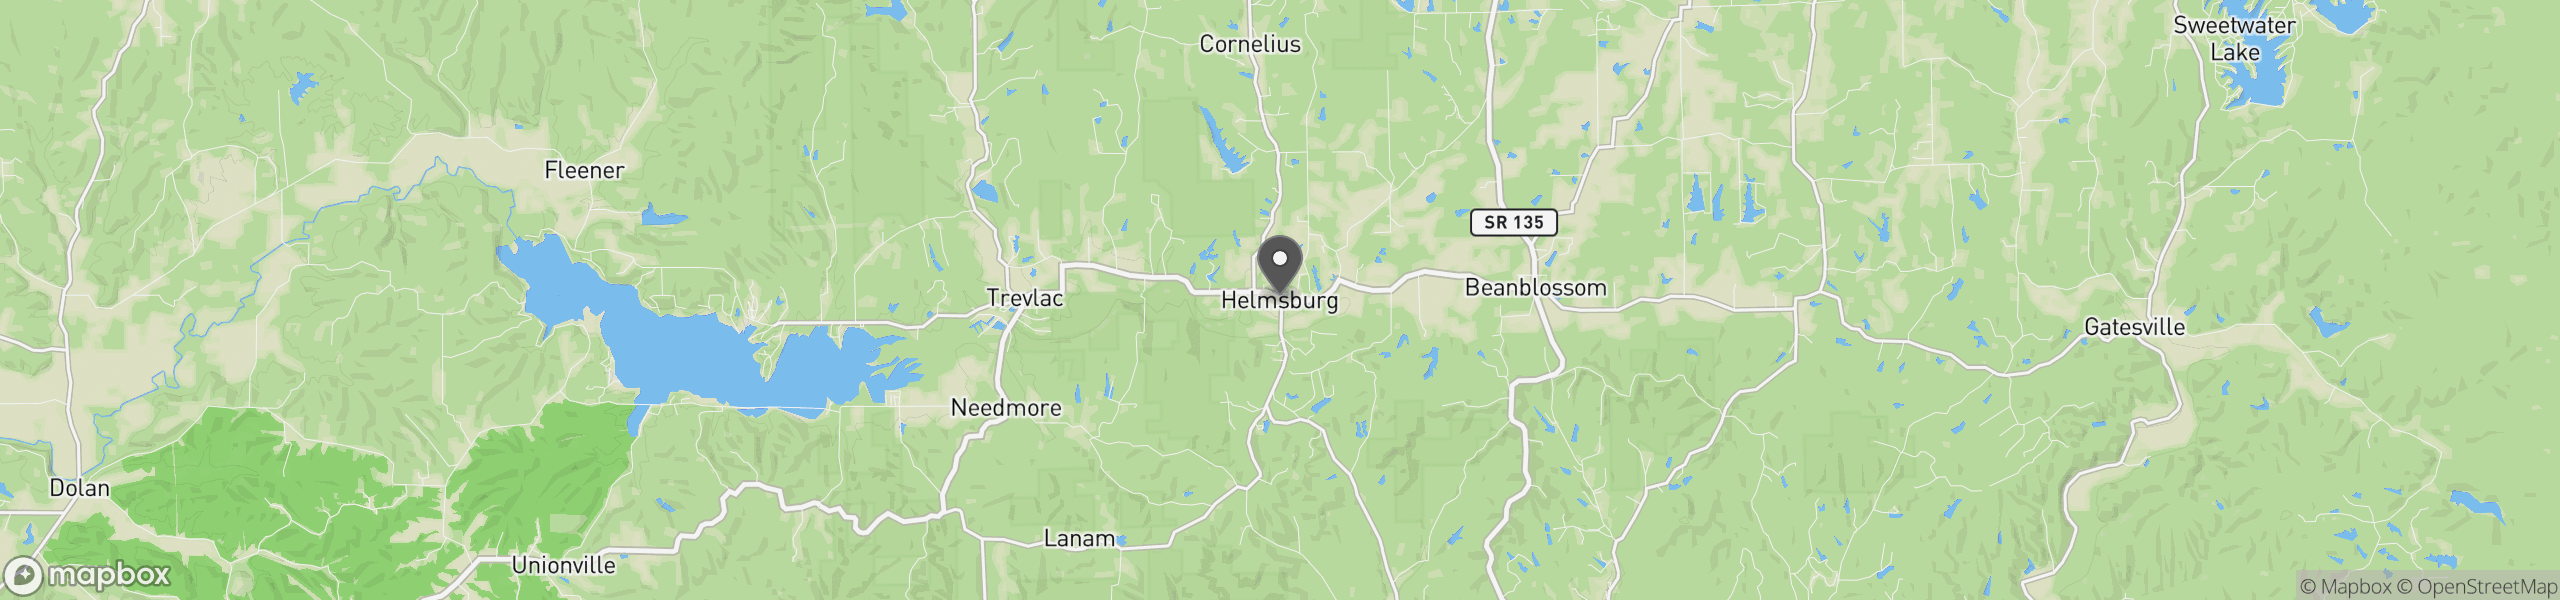 Helmsburg, IN 47435